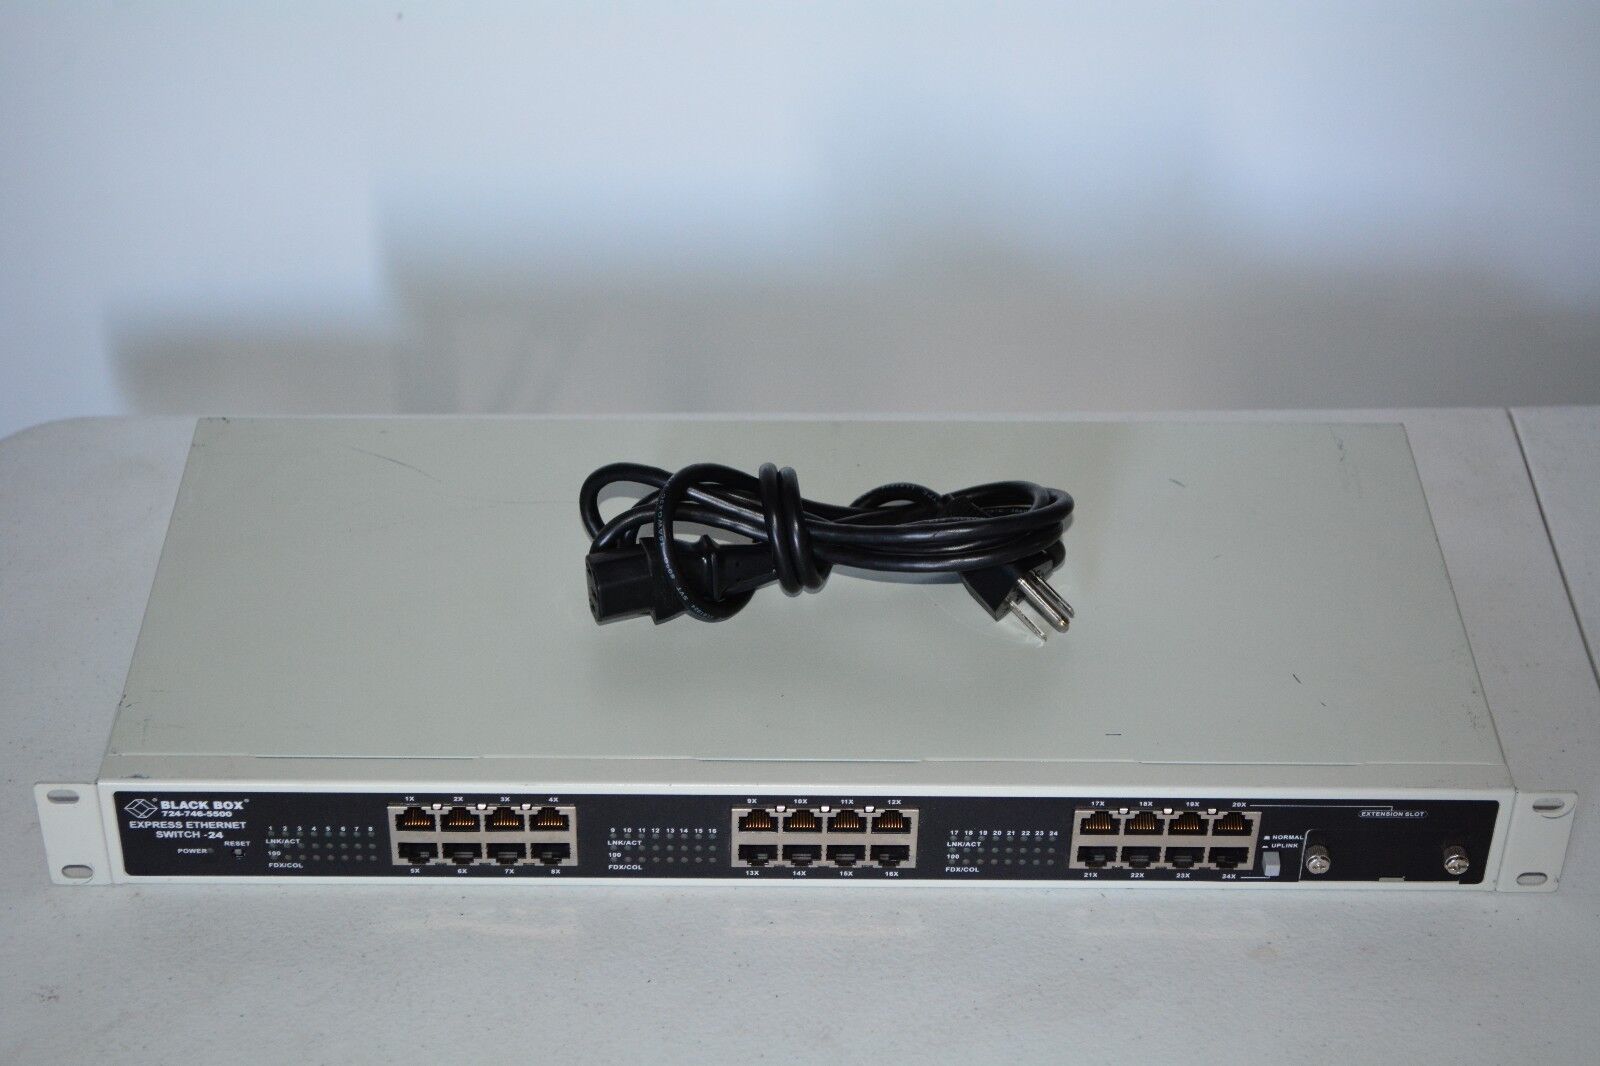 Black Box LB9024A Express Ethernet Switch 24-Port